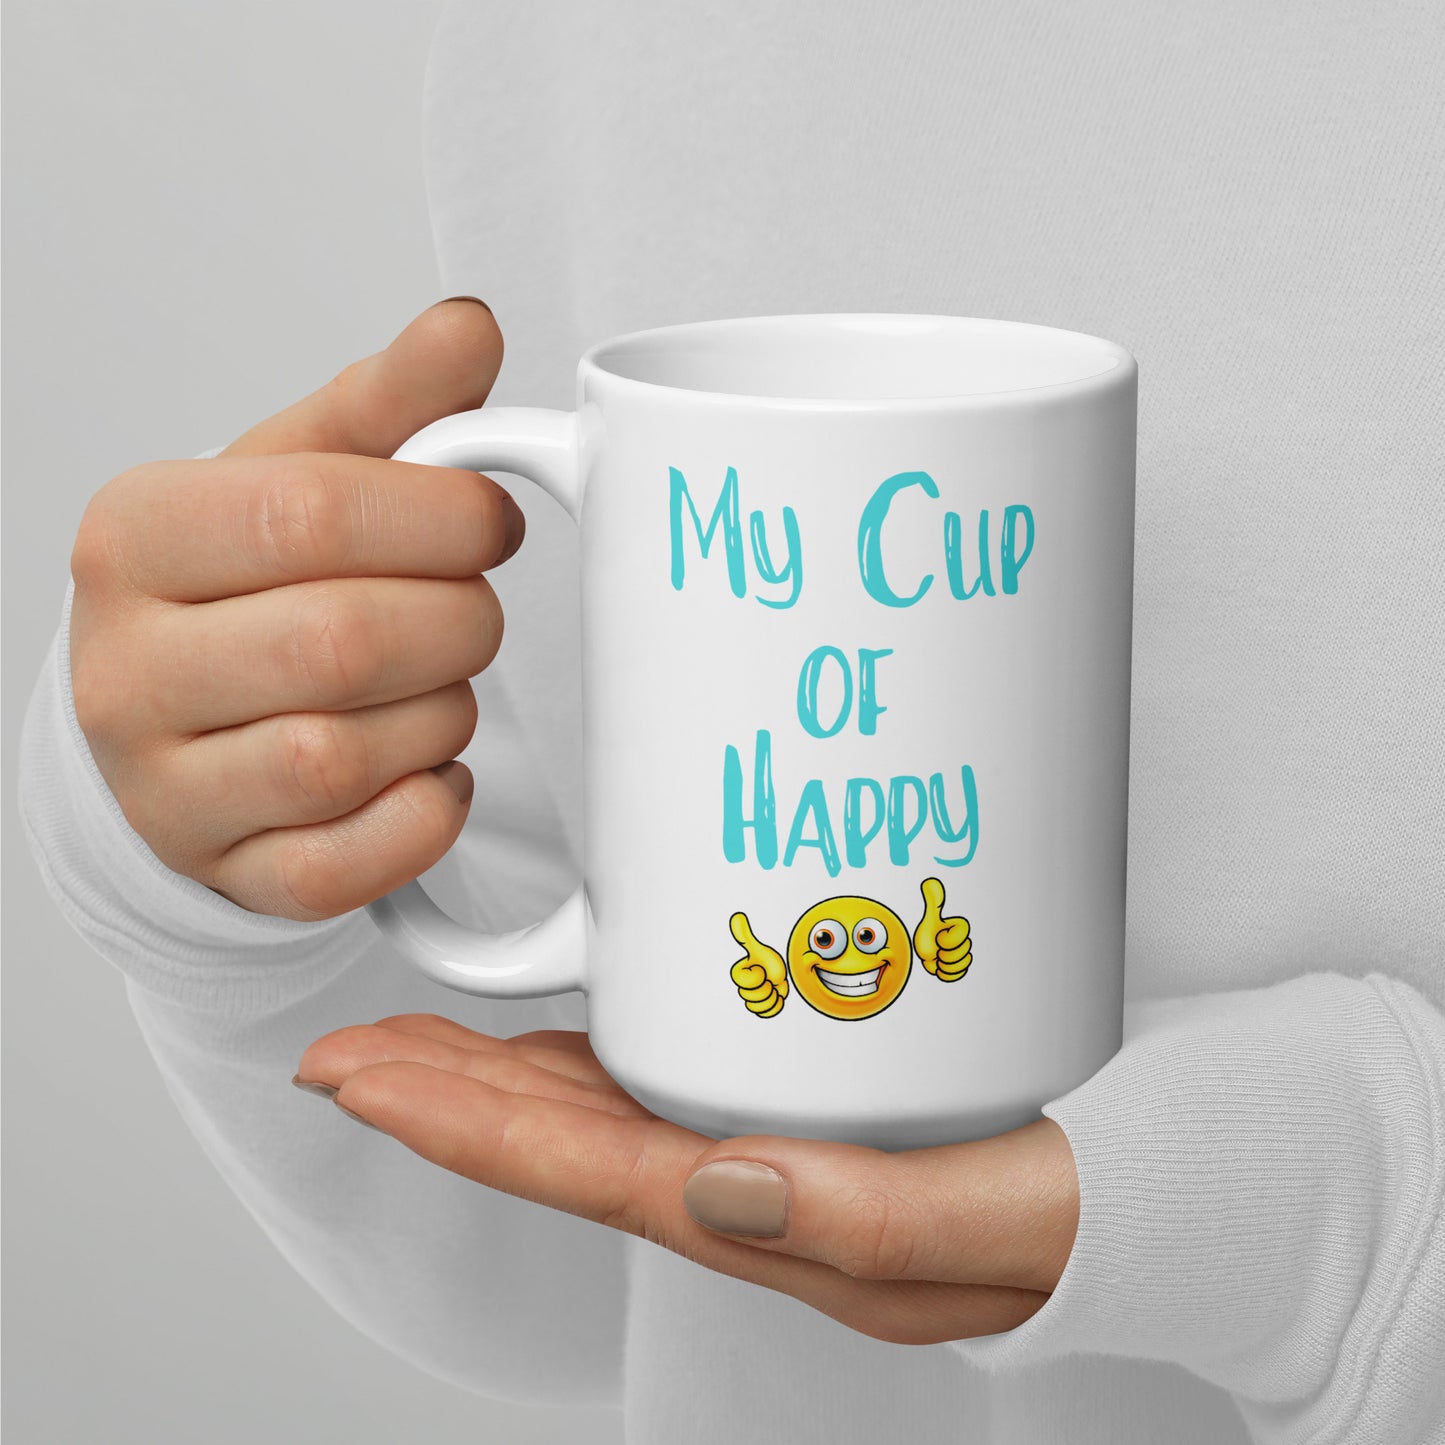 White Glossy Printed Mug - My Cup of Happy